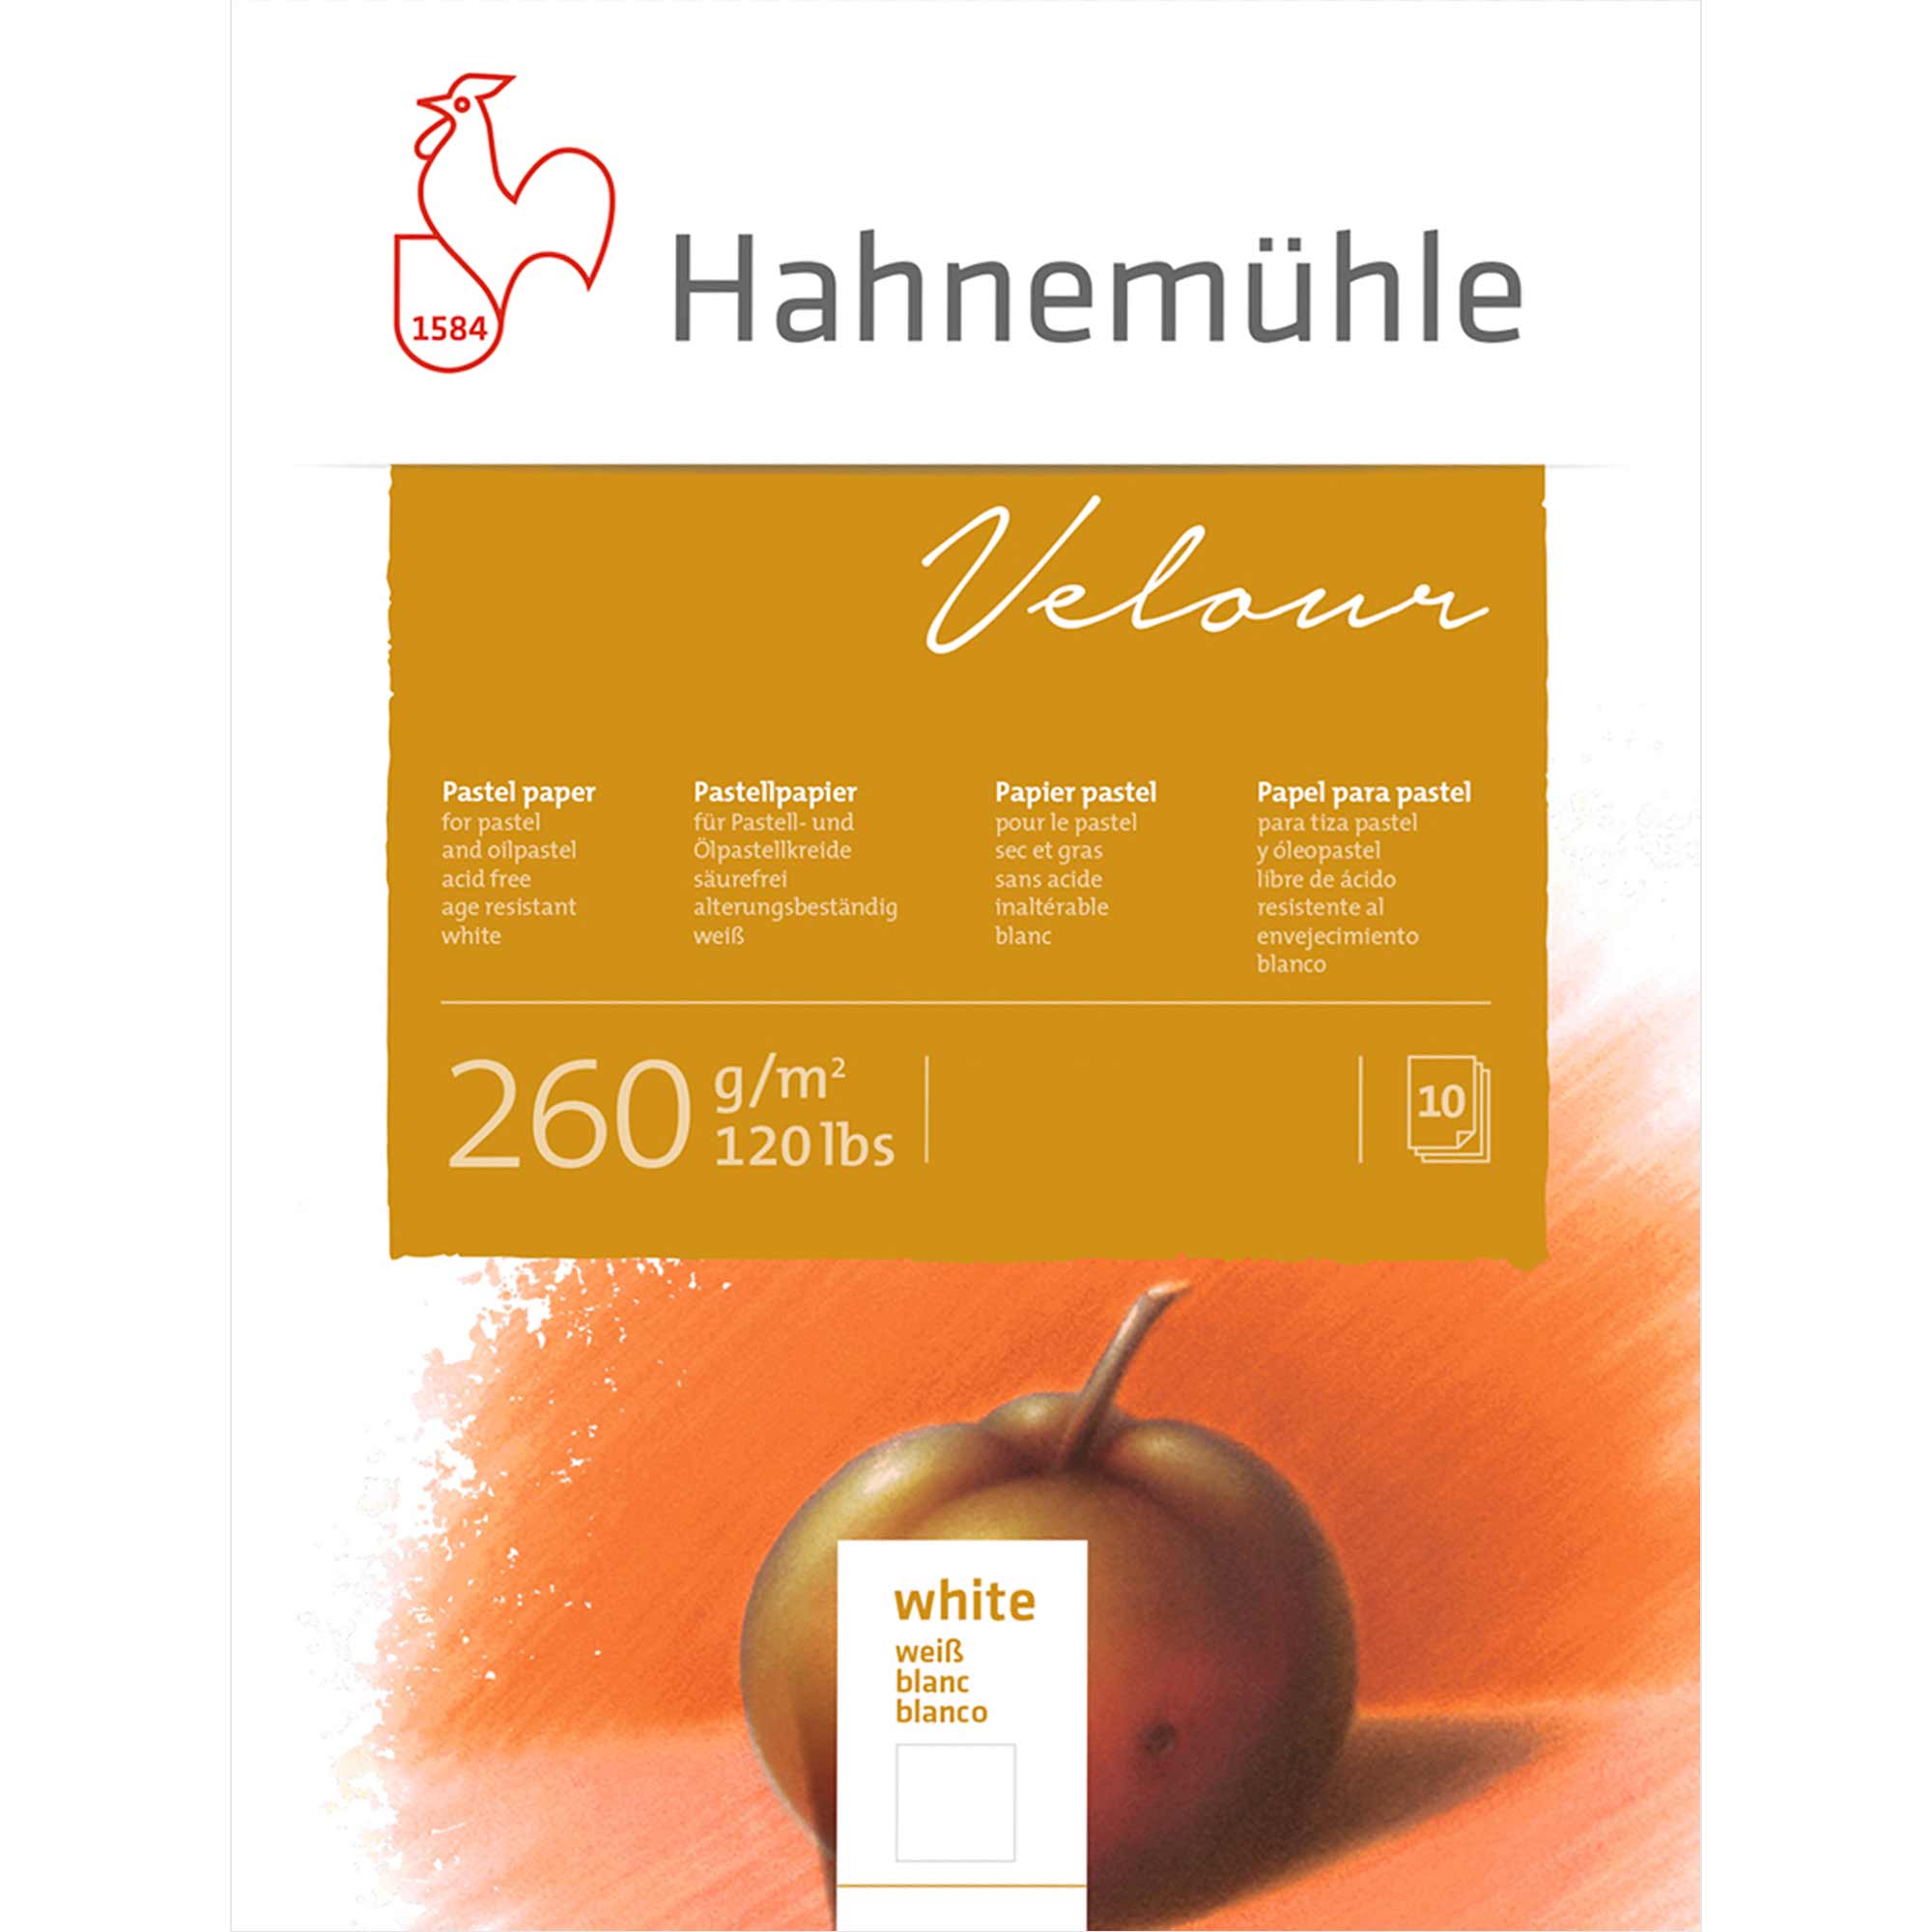 Hahnemühle Velour Pastel Pad - Cover